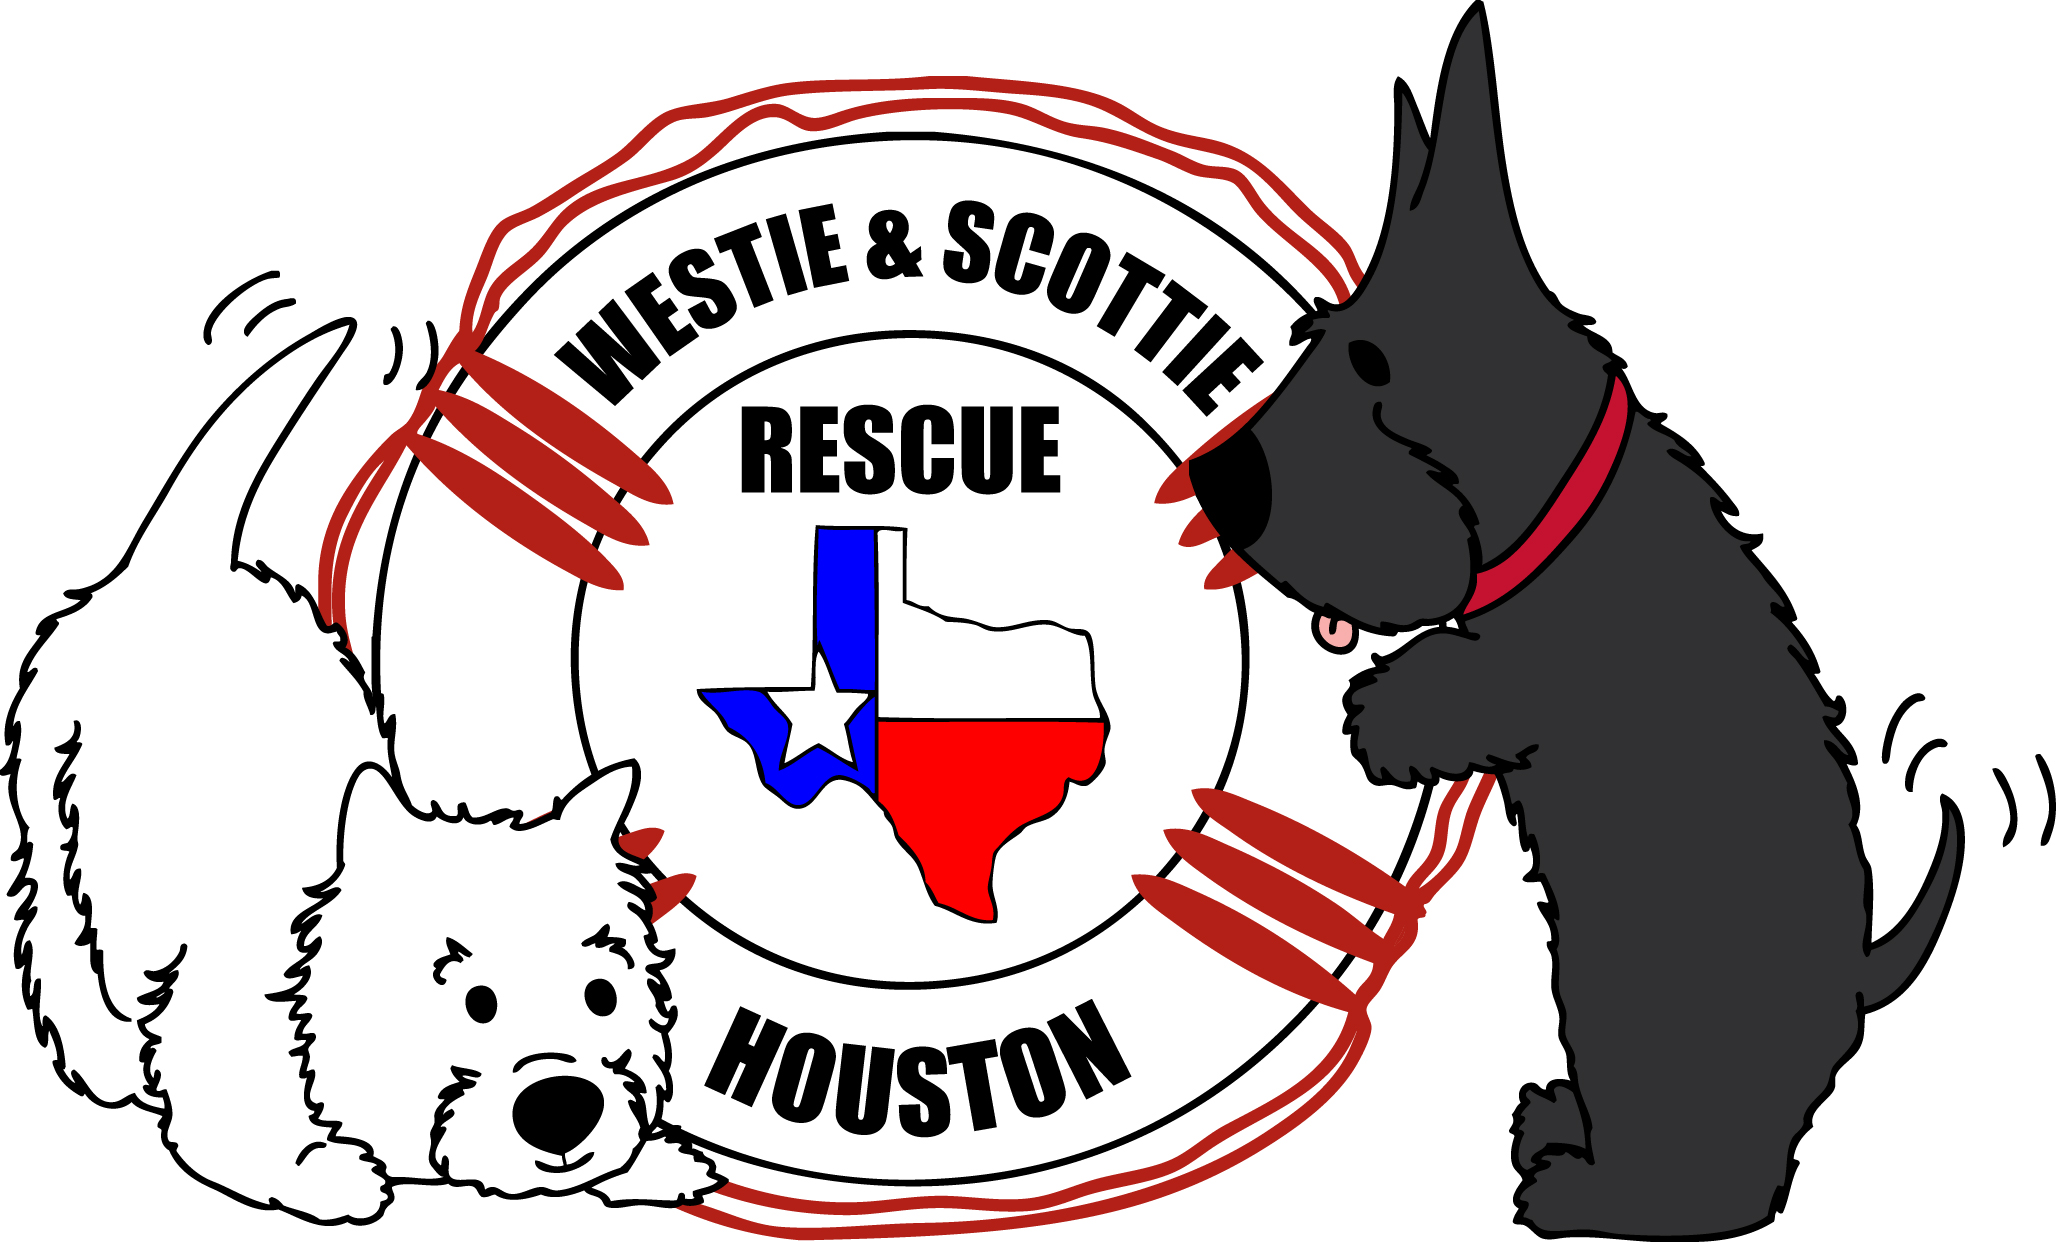 Westie & Scottie Rescue Houston